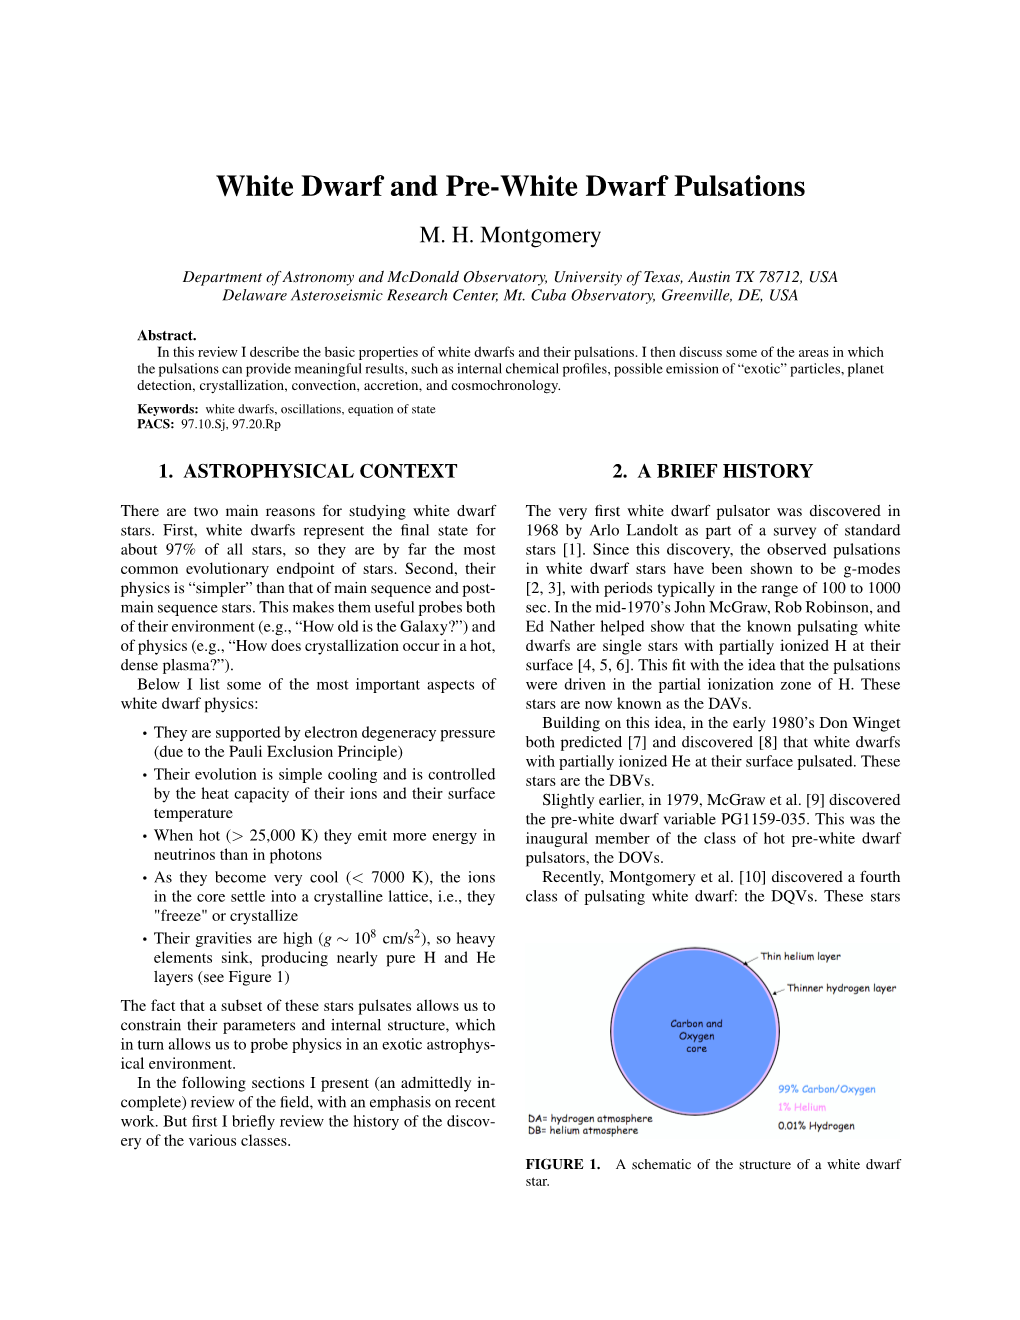 White Dwarf and Pre-White Dwarf Pulsations M